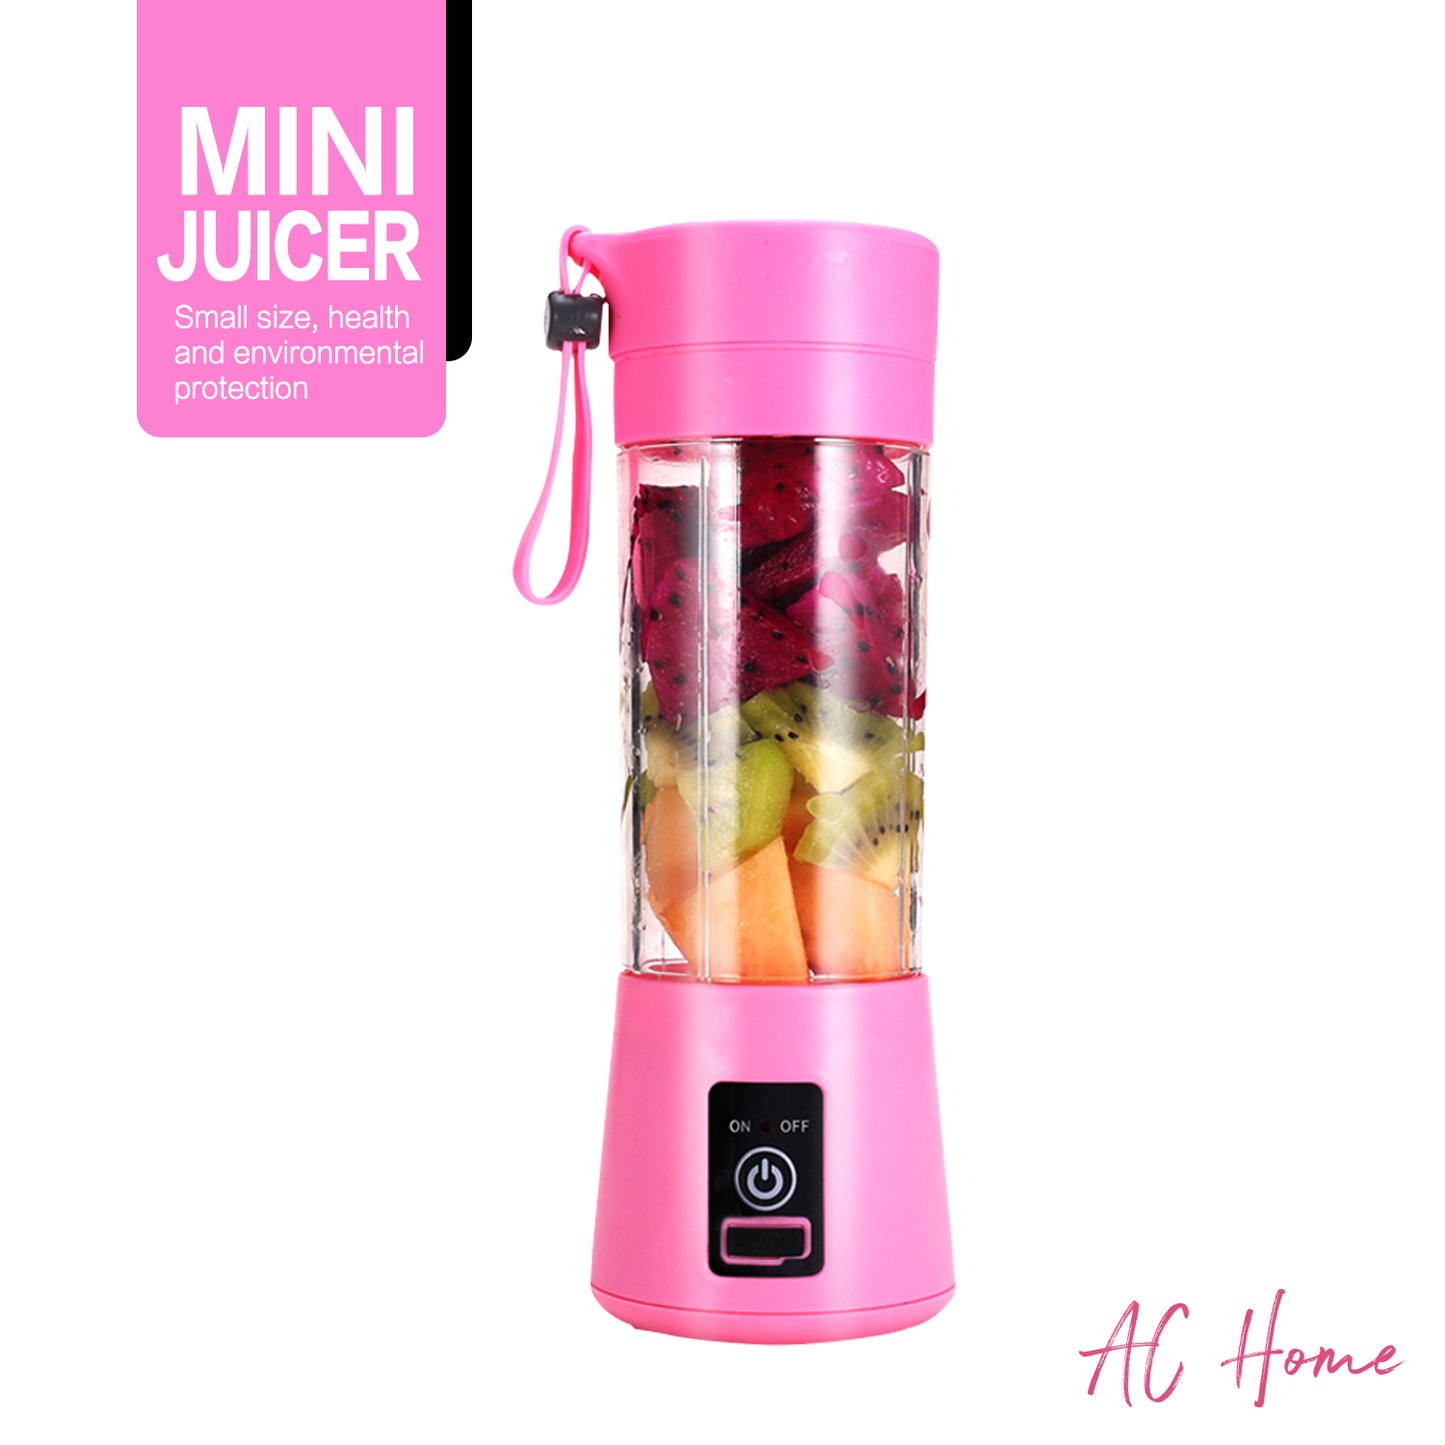 Household Portable Juicer Blender Household Fruit Mixer- Six Blades in 3D 380ml USB Juicer Cup